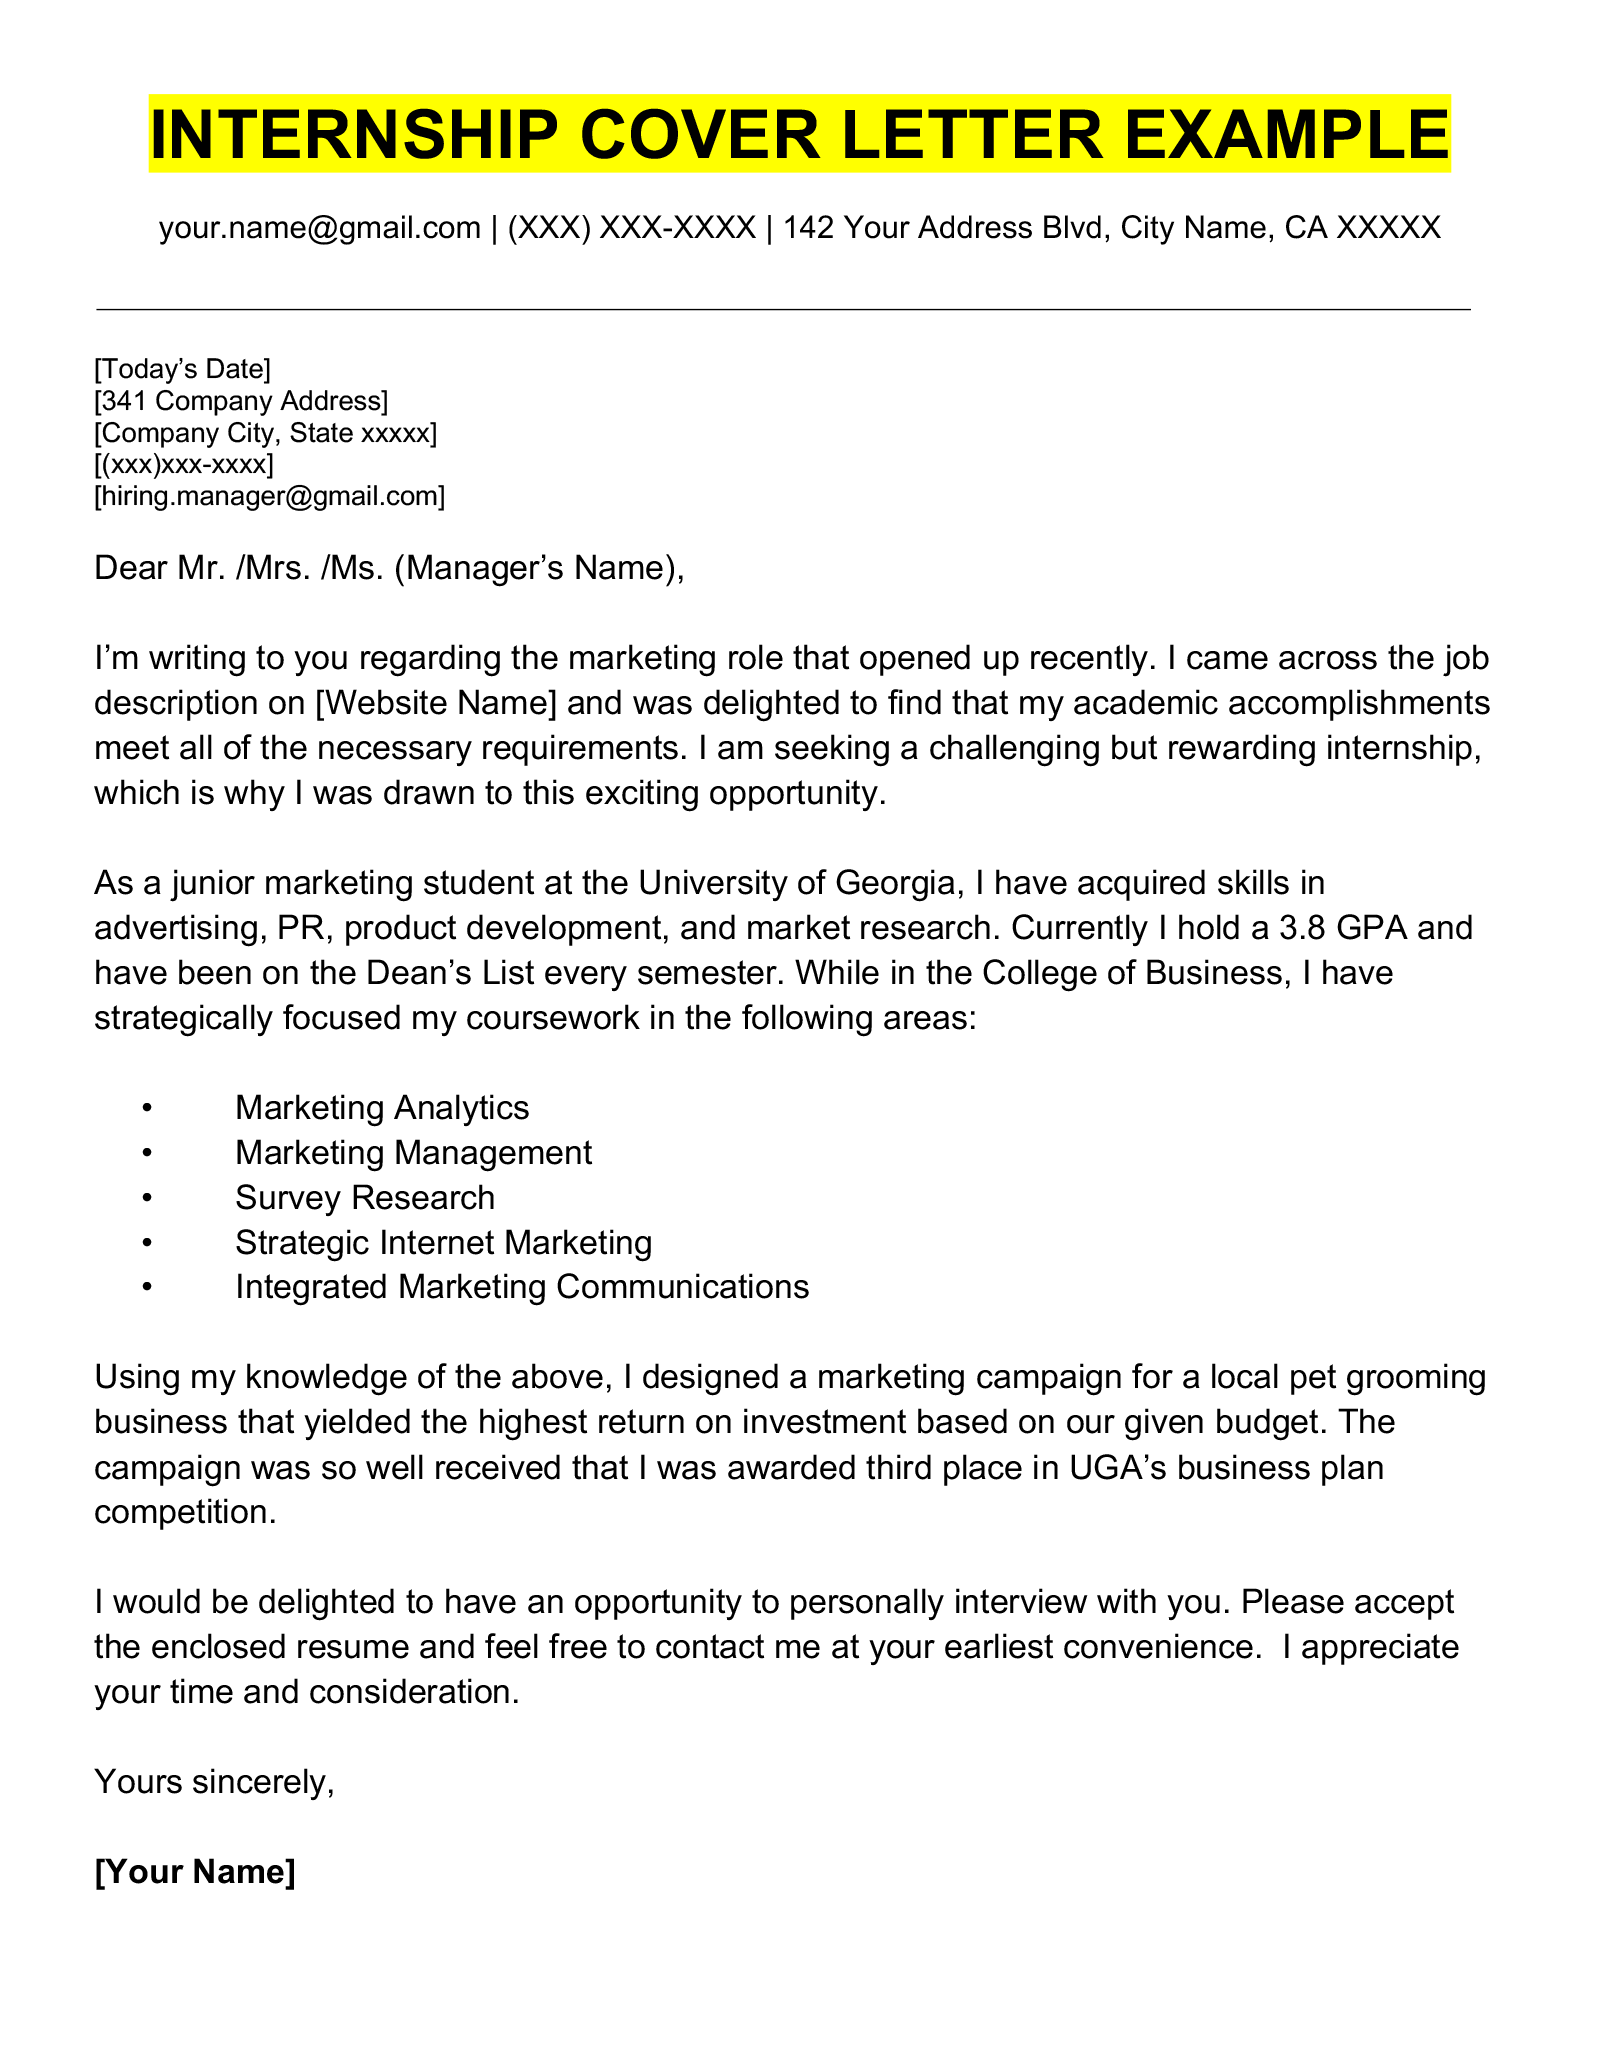 cover letter samples for college internships